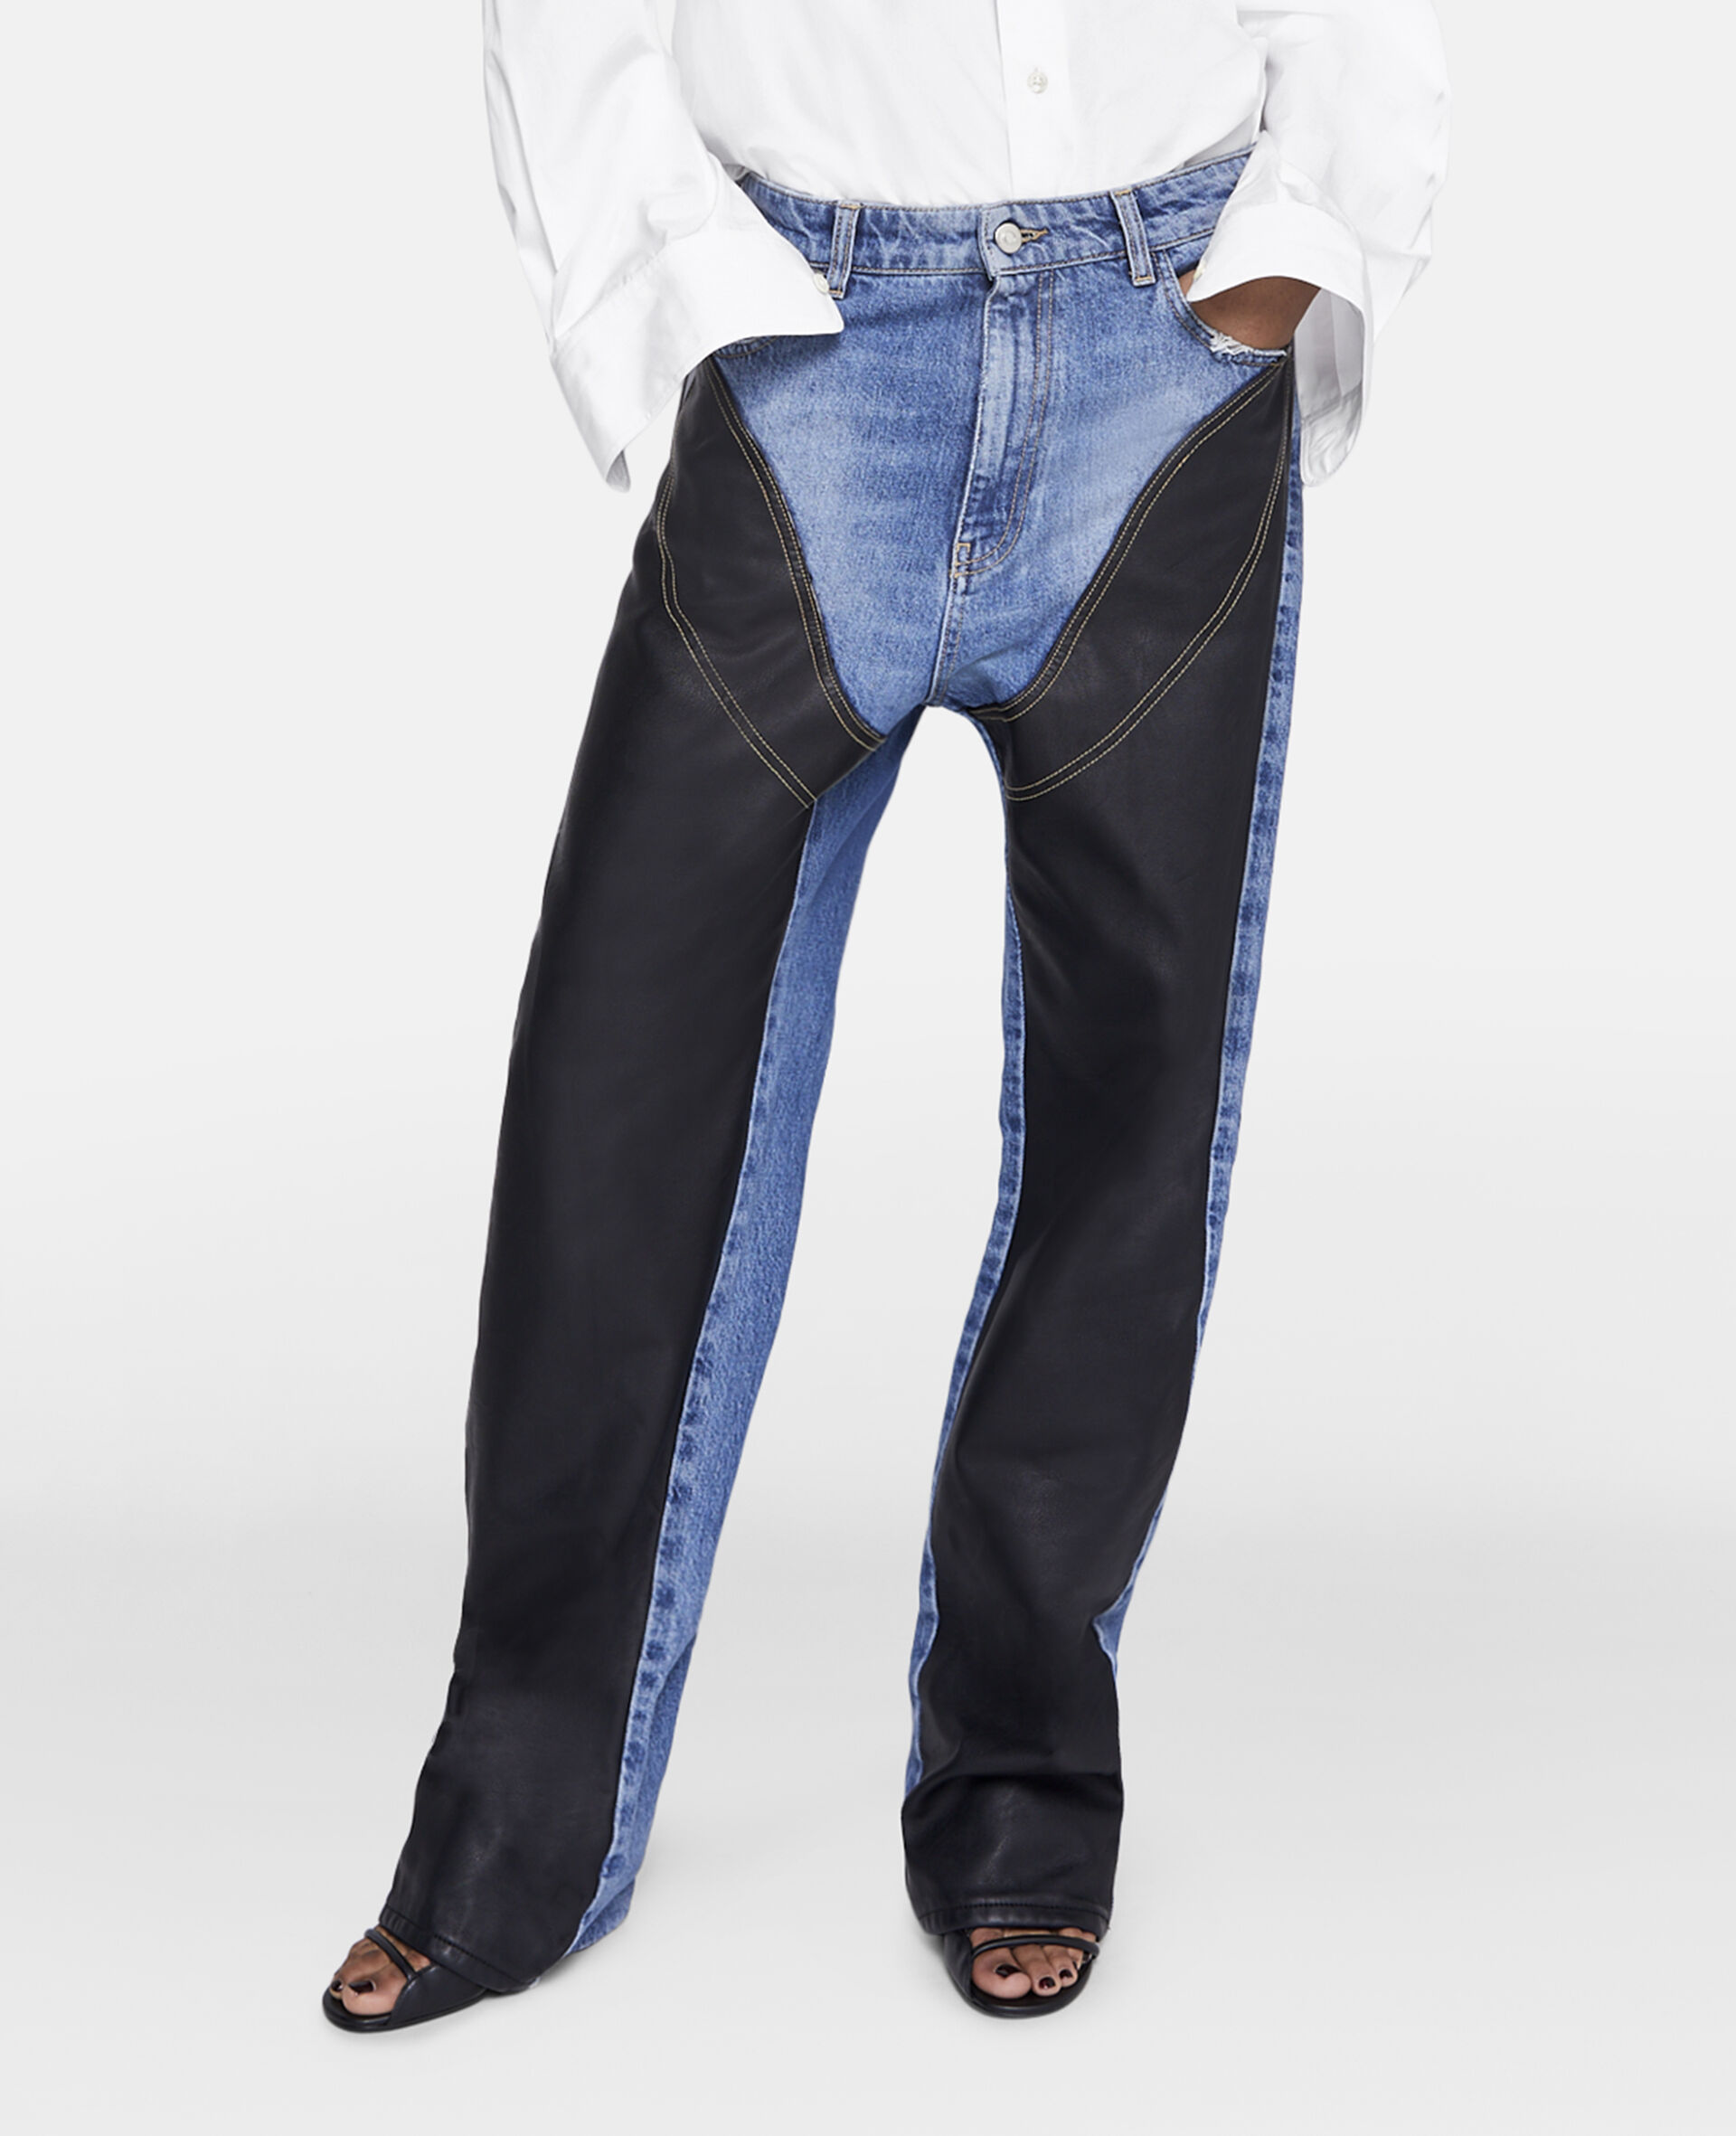 Alter Mat Chap Jeans-Multicolour-large image number 3